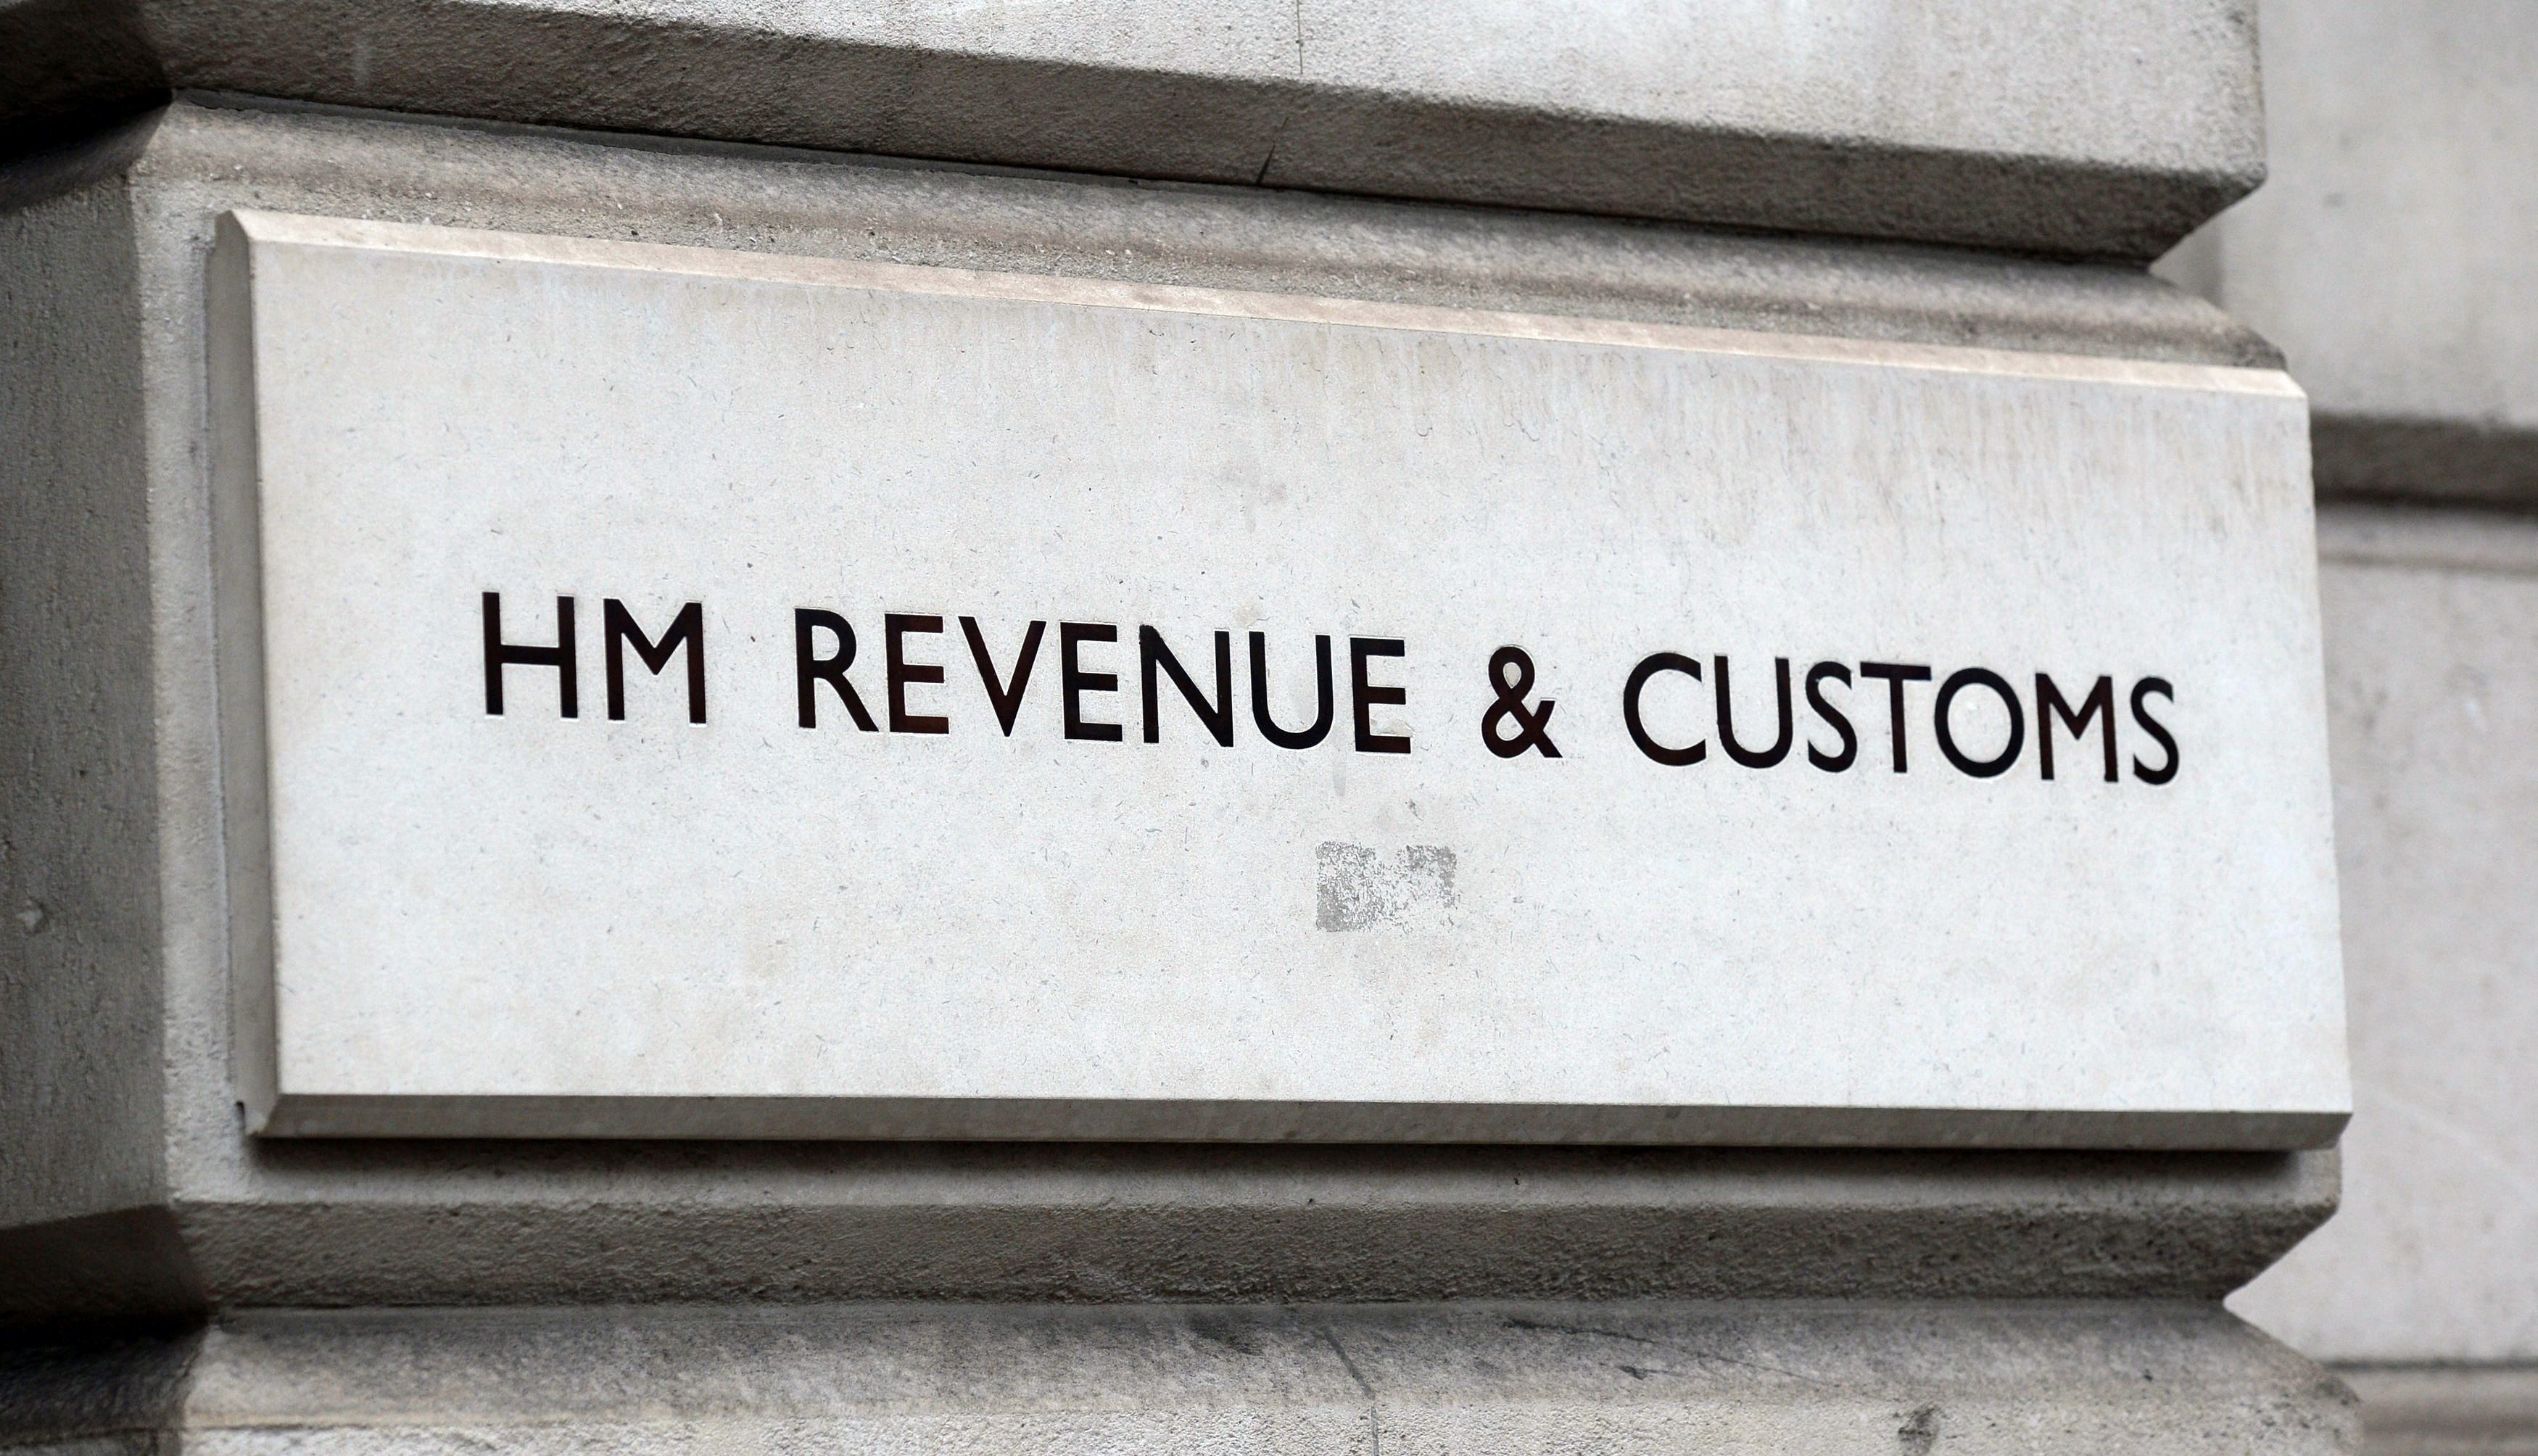 A HM Revenue and Customs (HMRC) sign.